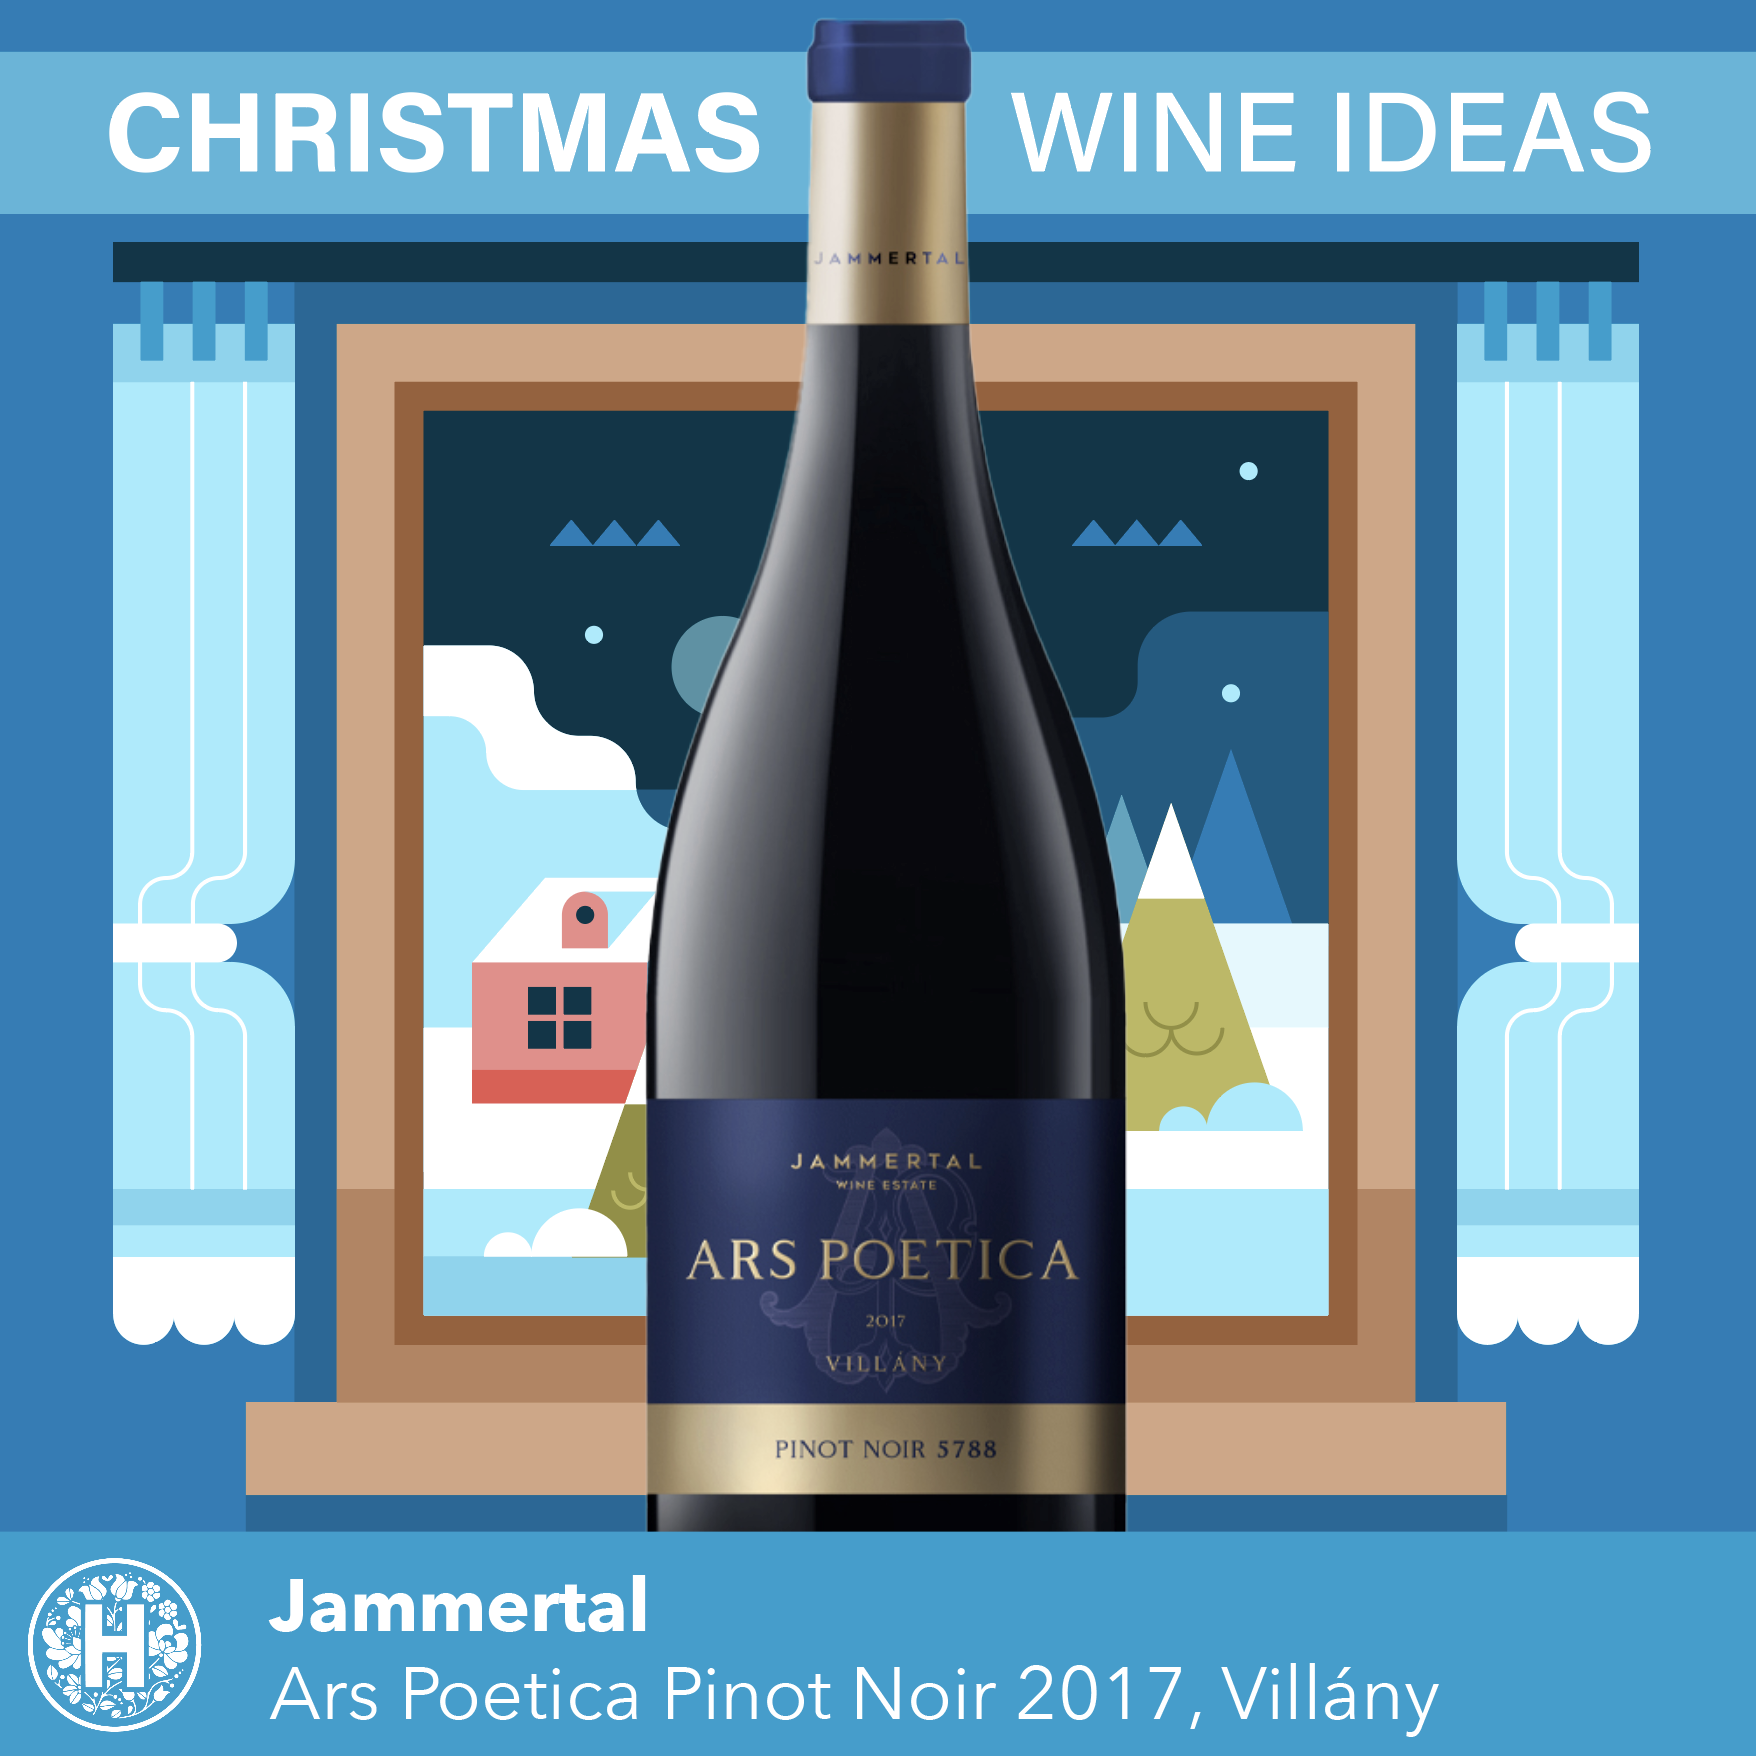 Christmas Wine Ideas in Hungary: Jammertal Ars Poetica Pinot Noir 2017